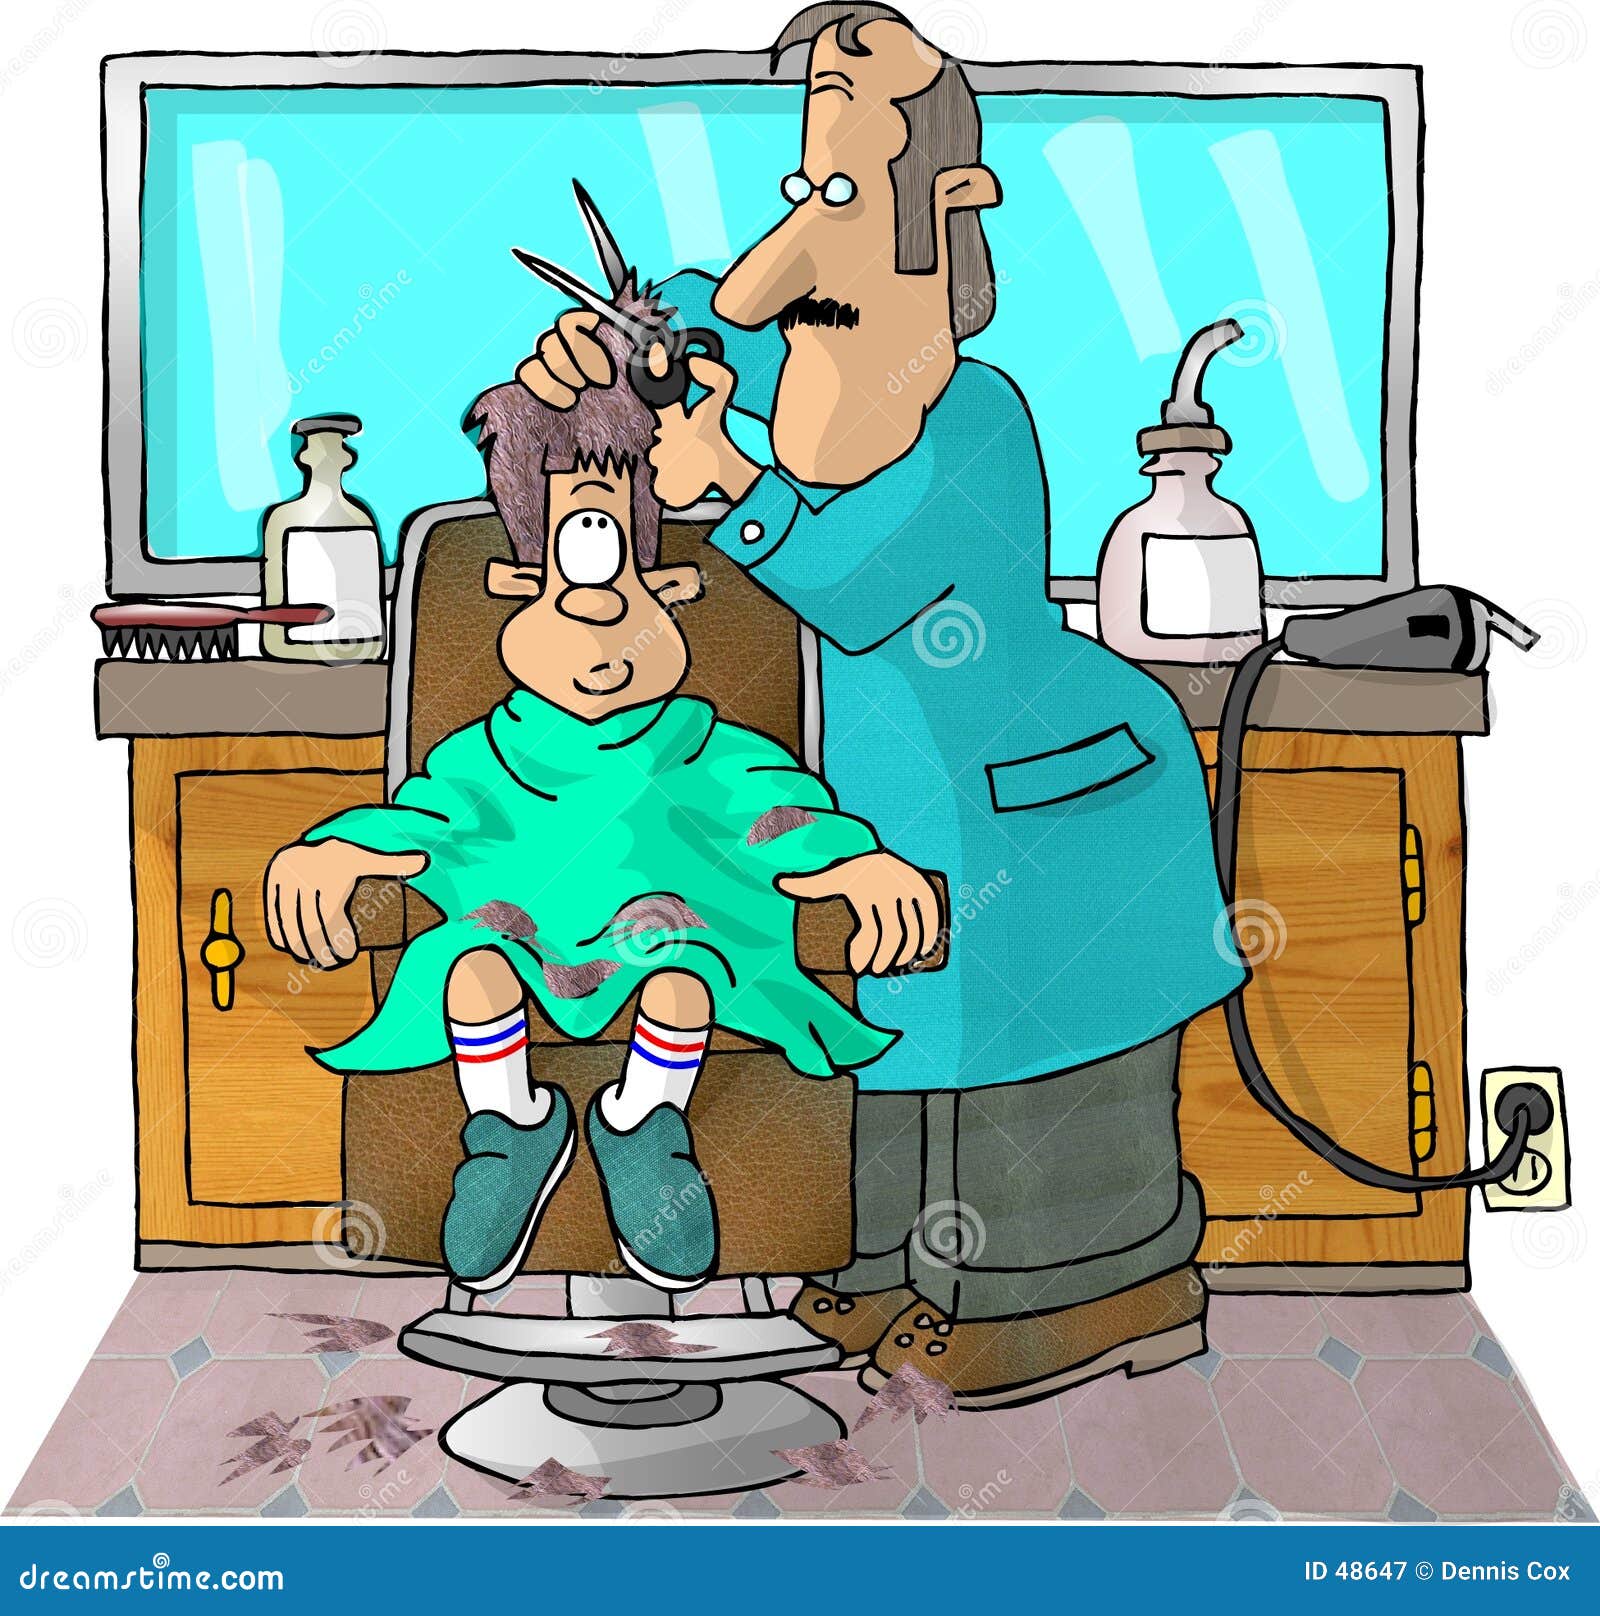 Haircut stock illustration. Illustration of male, humor - 48647